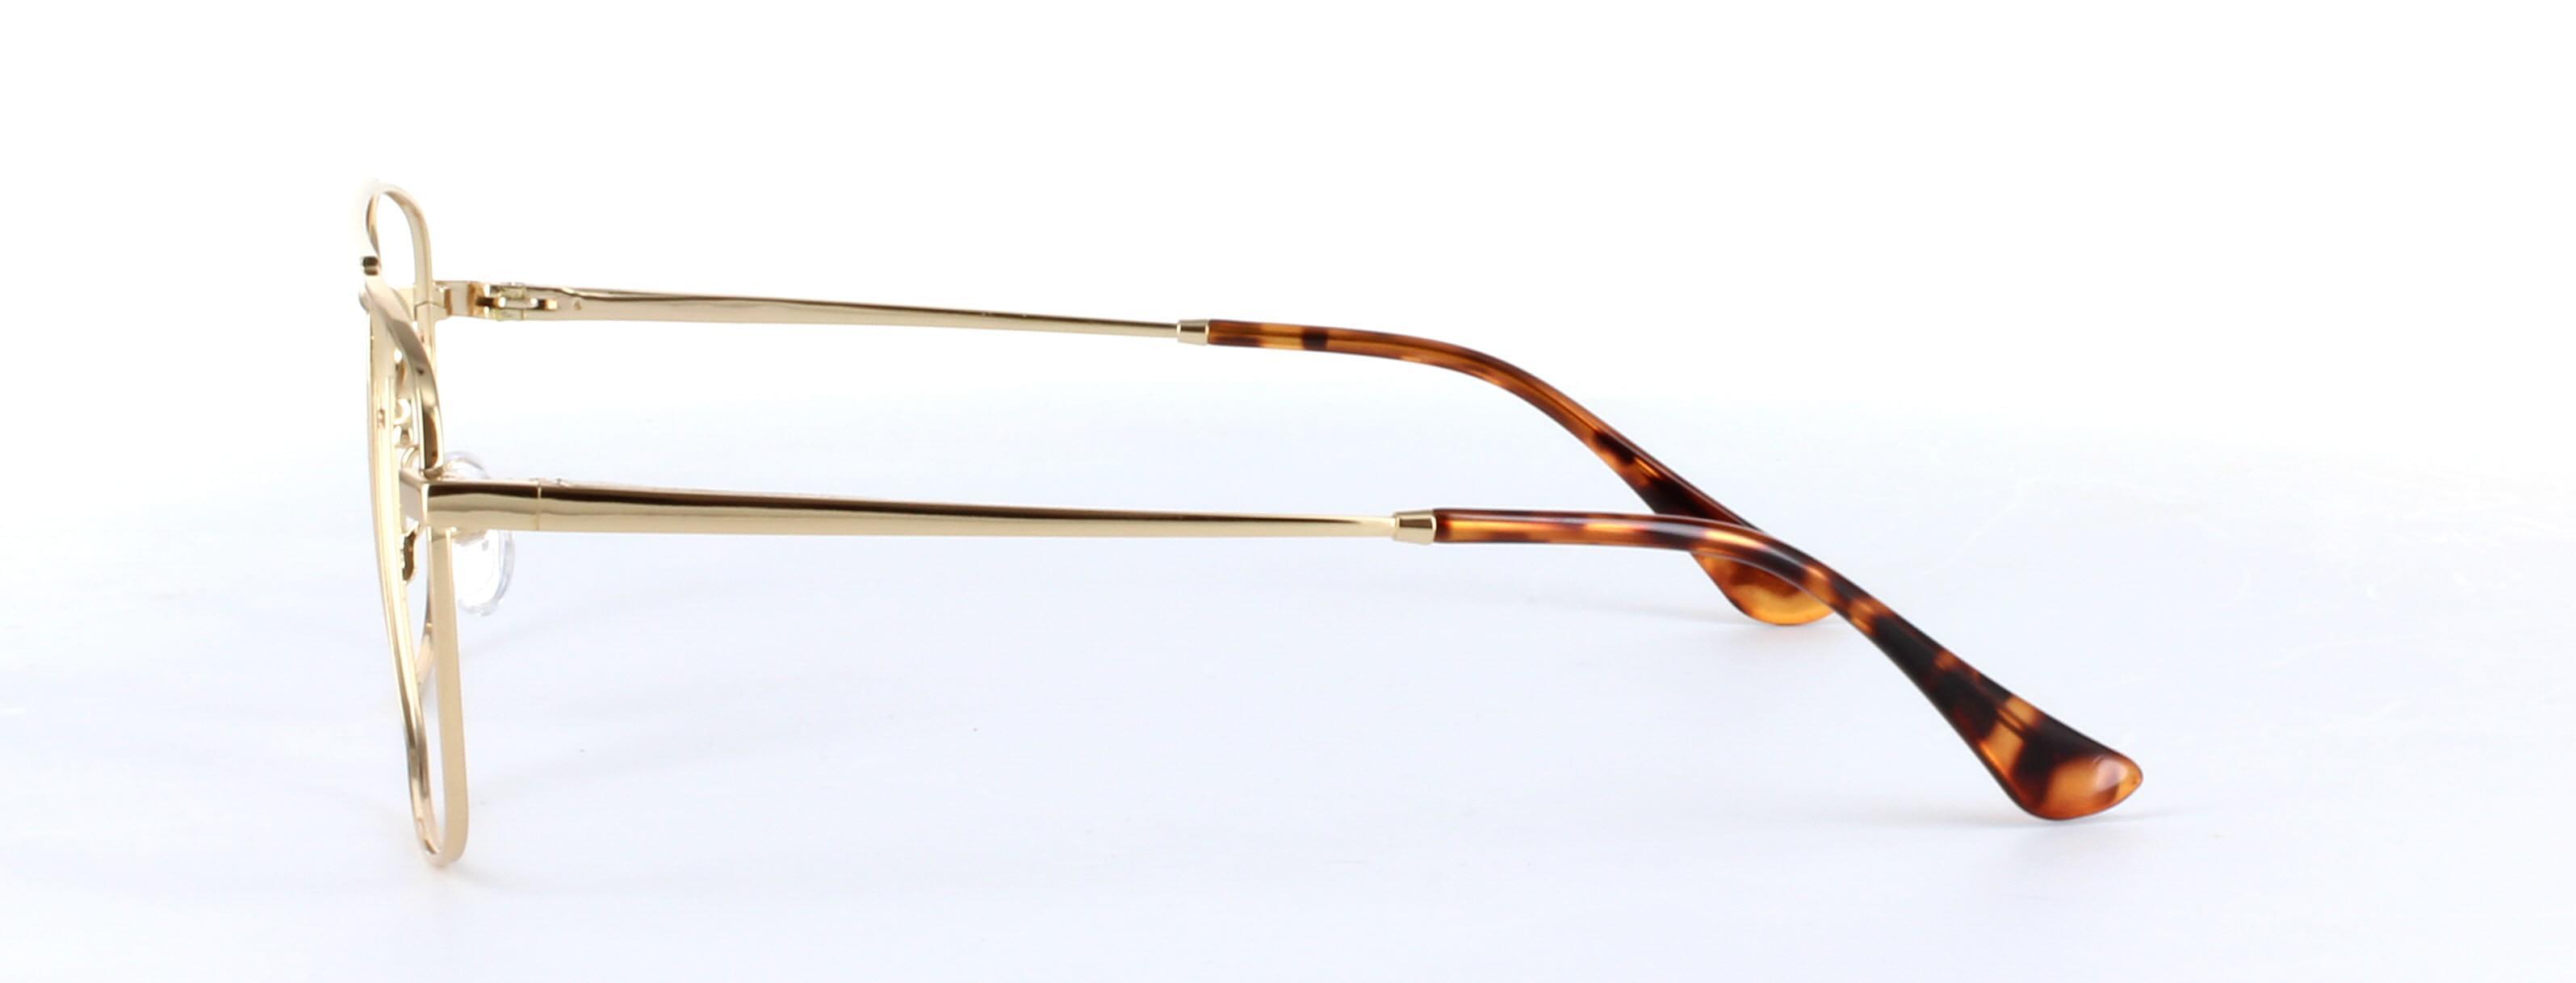 Enrique Gold Full Rim Aviator Metal Glasses - Image View 2